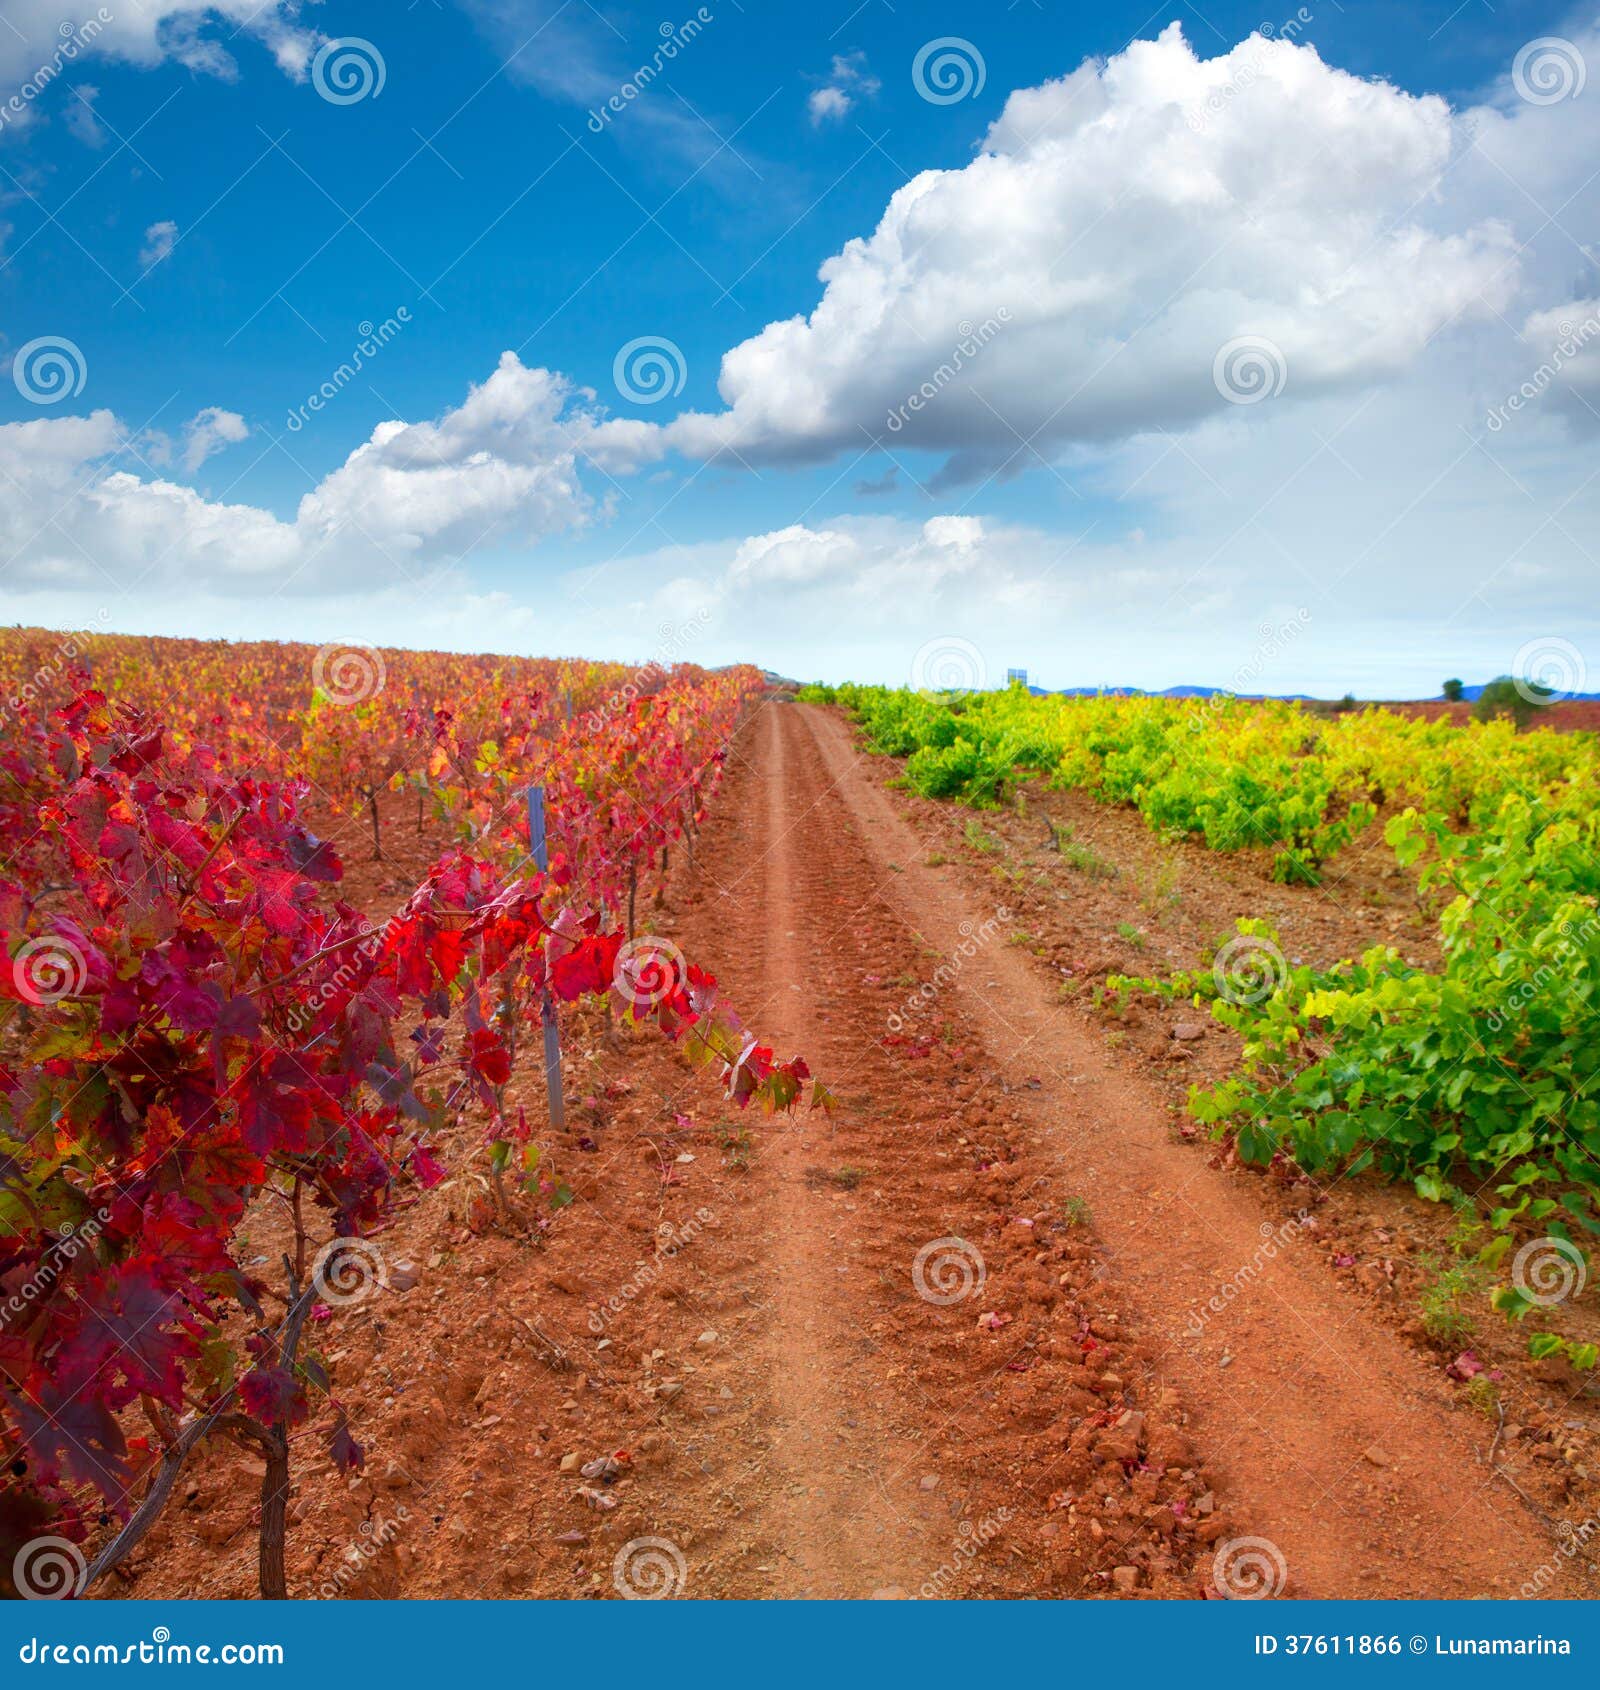 carinena and paniza vineyards in autumn red zaragoza spain